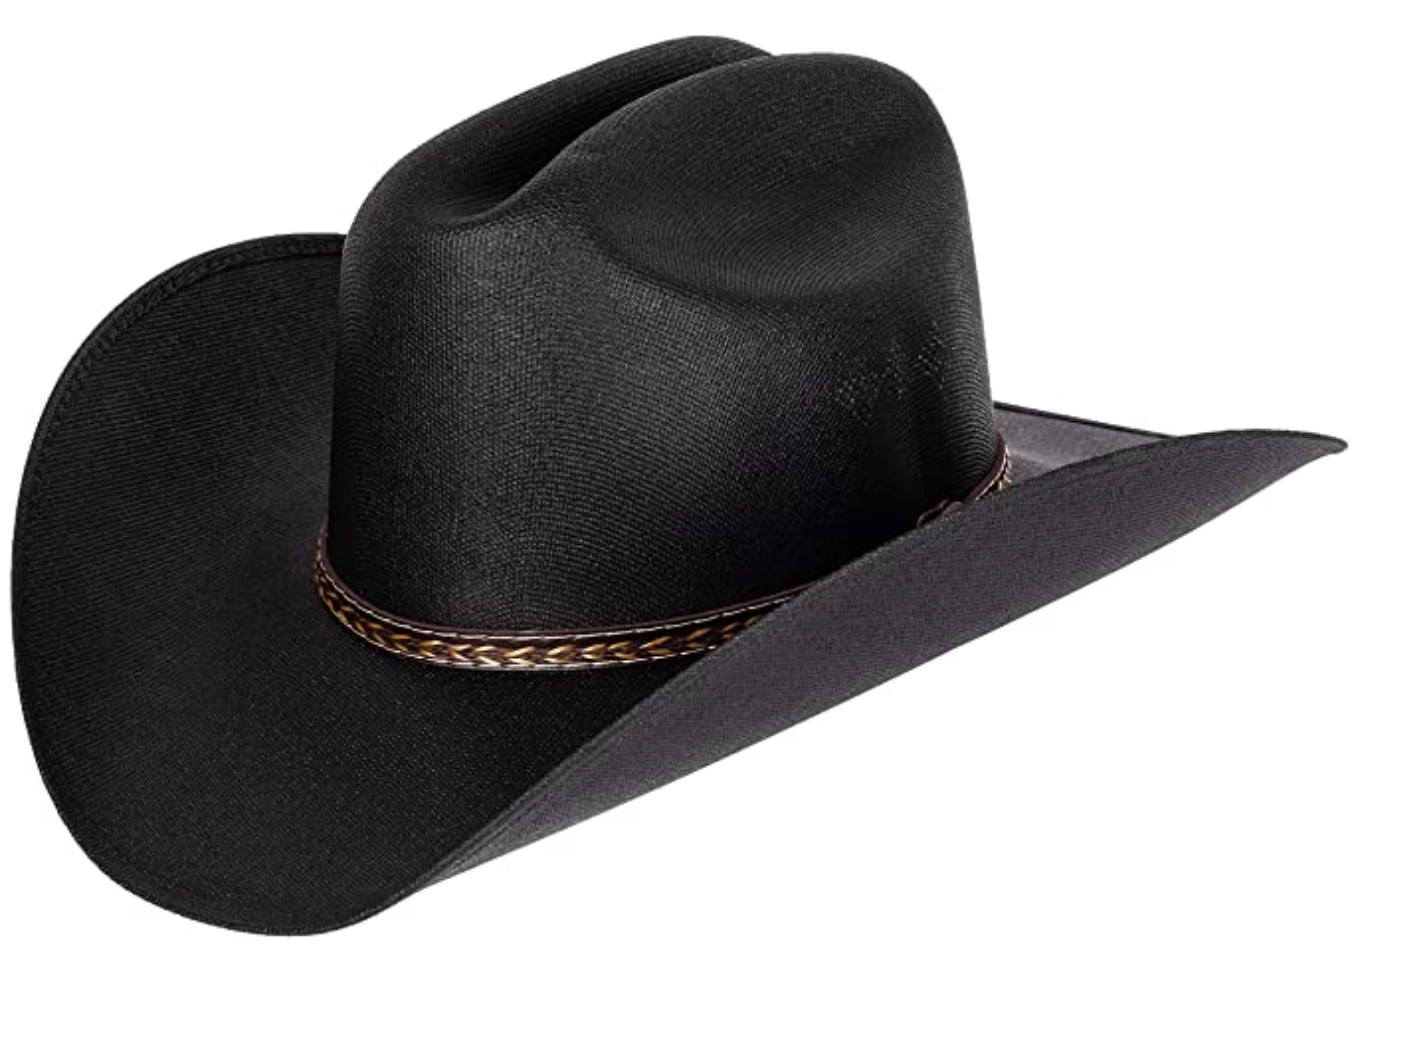 Aloiness Cowboy Straw Hat Cowboy Western Aussie Style Outback Bush Hat 